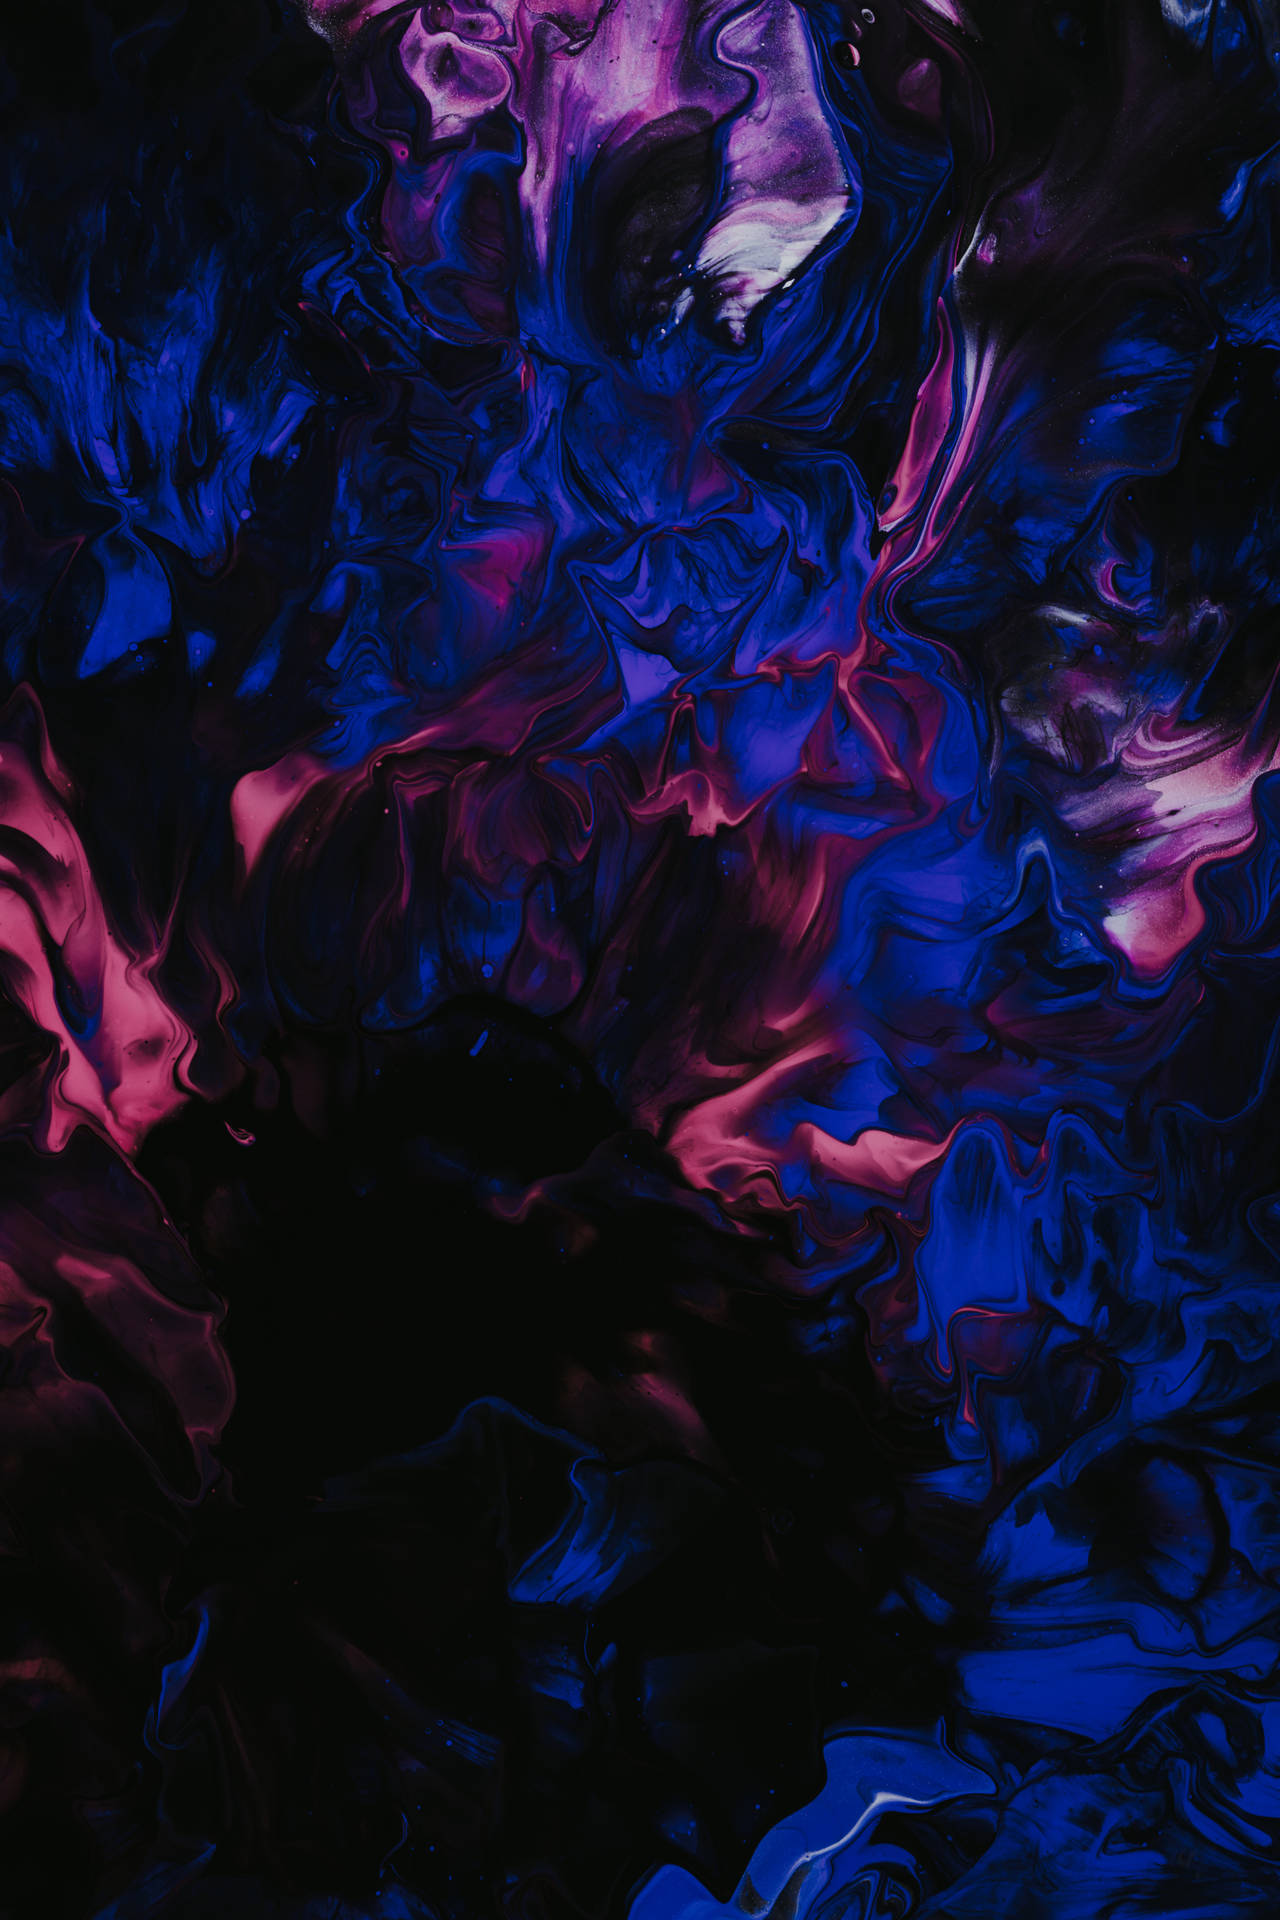 Dark Abstract Digital Painting Wallpaper